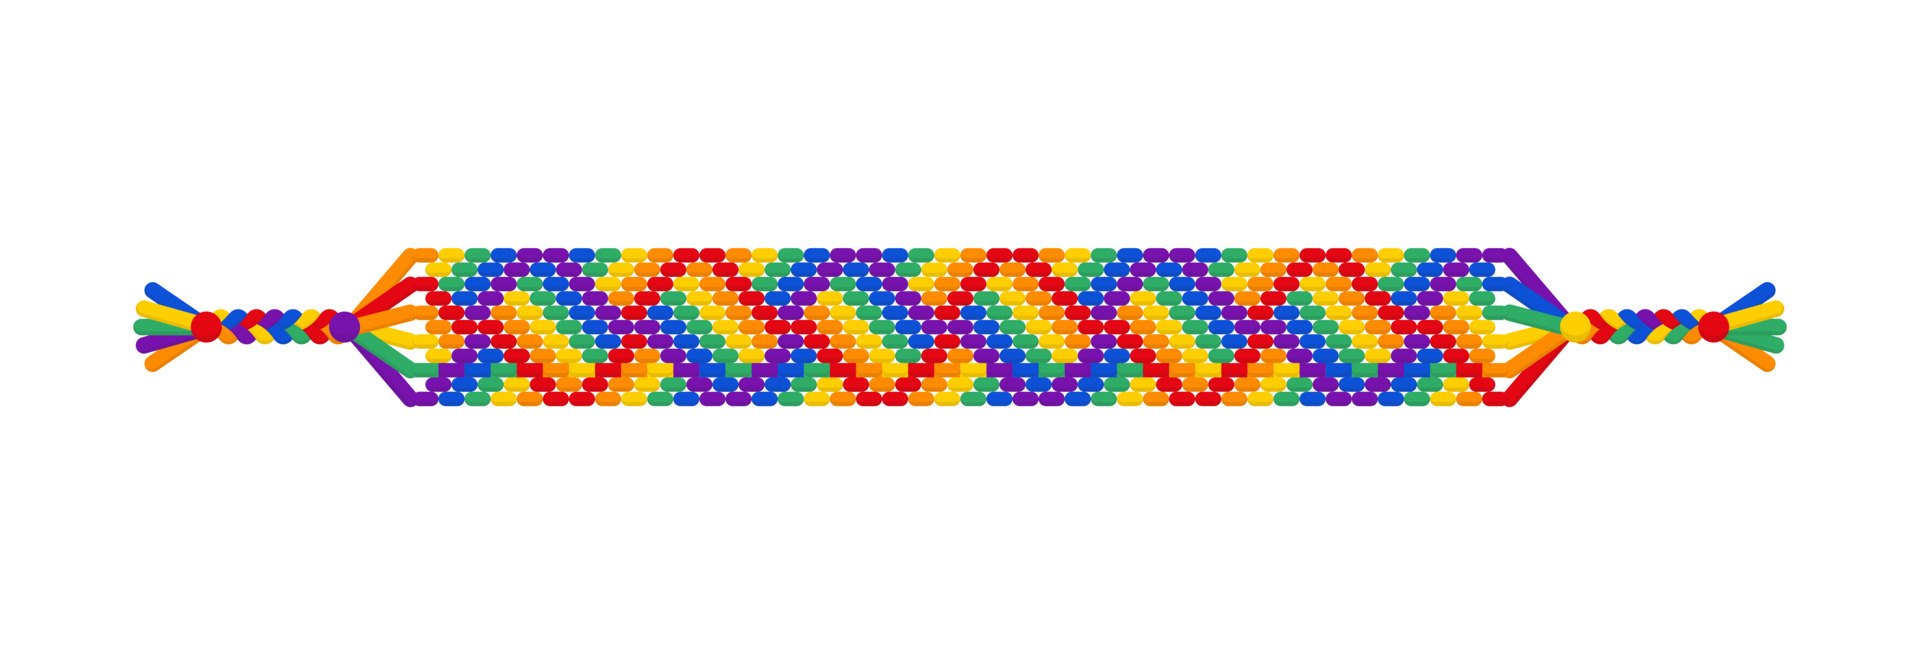 Vector Rainbow Lgbt Handmade Hippie Heart Friendship Bracelet Of